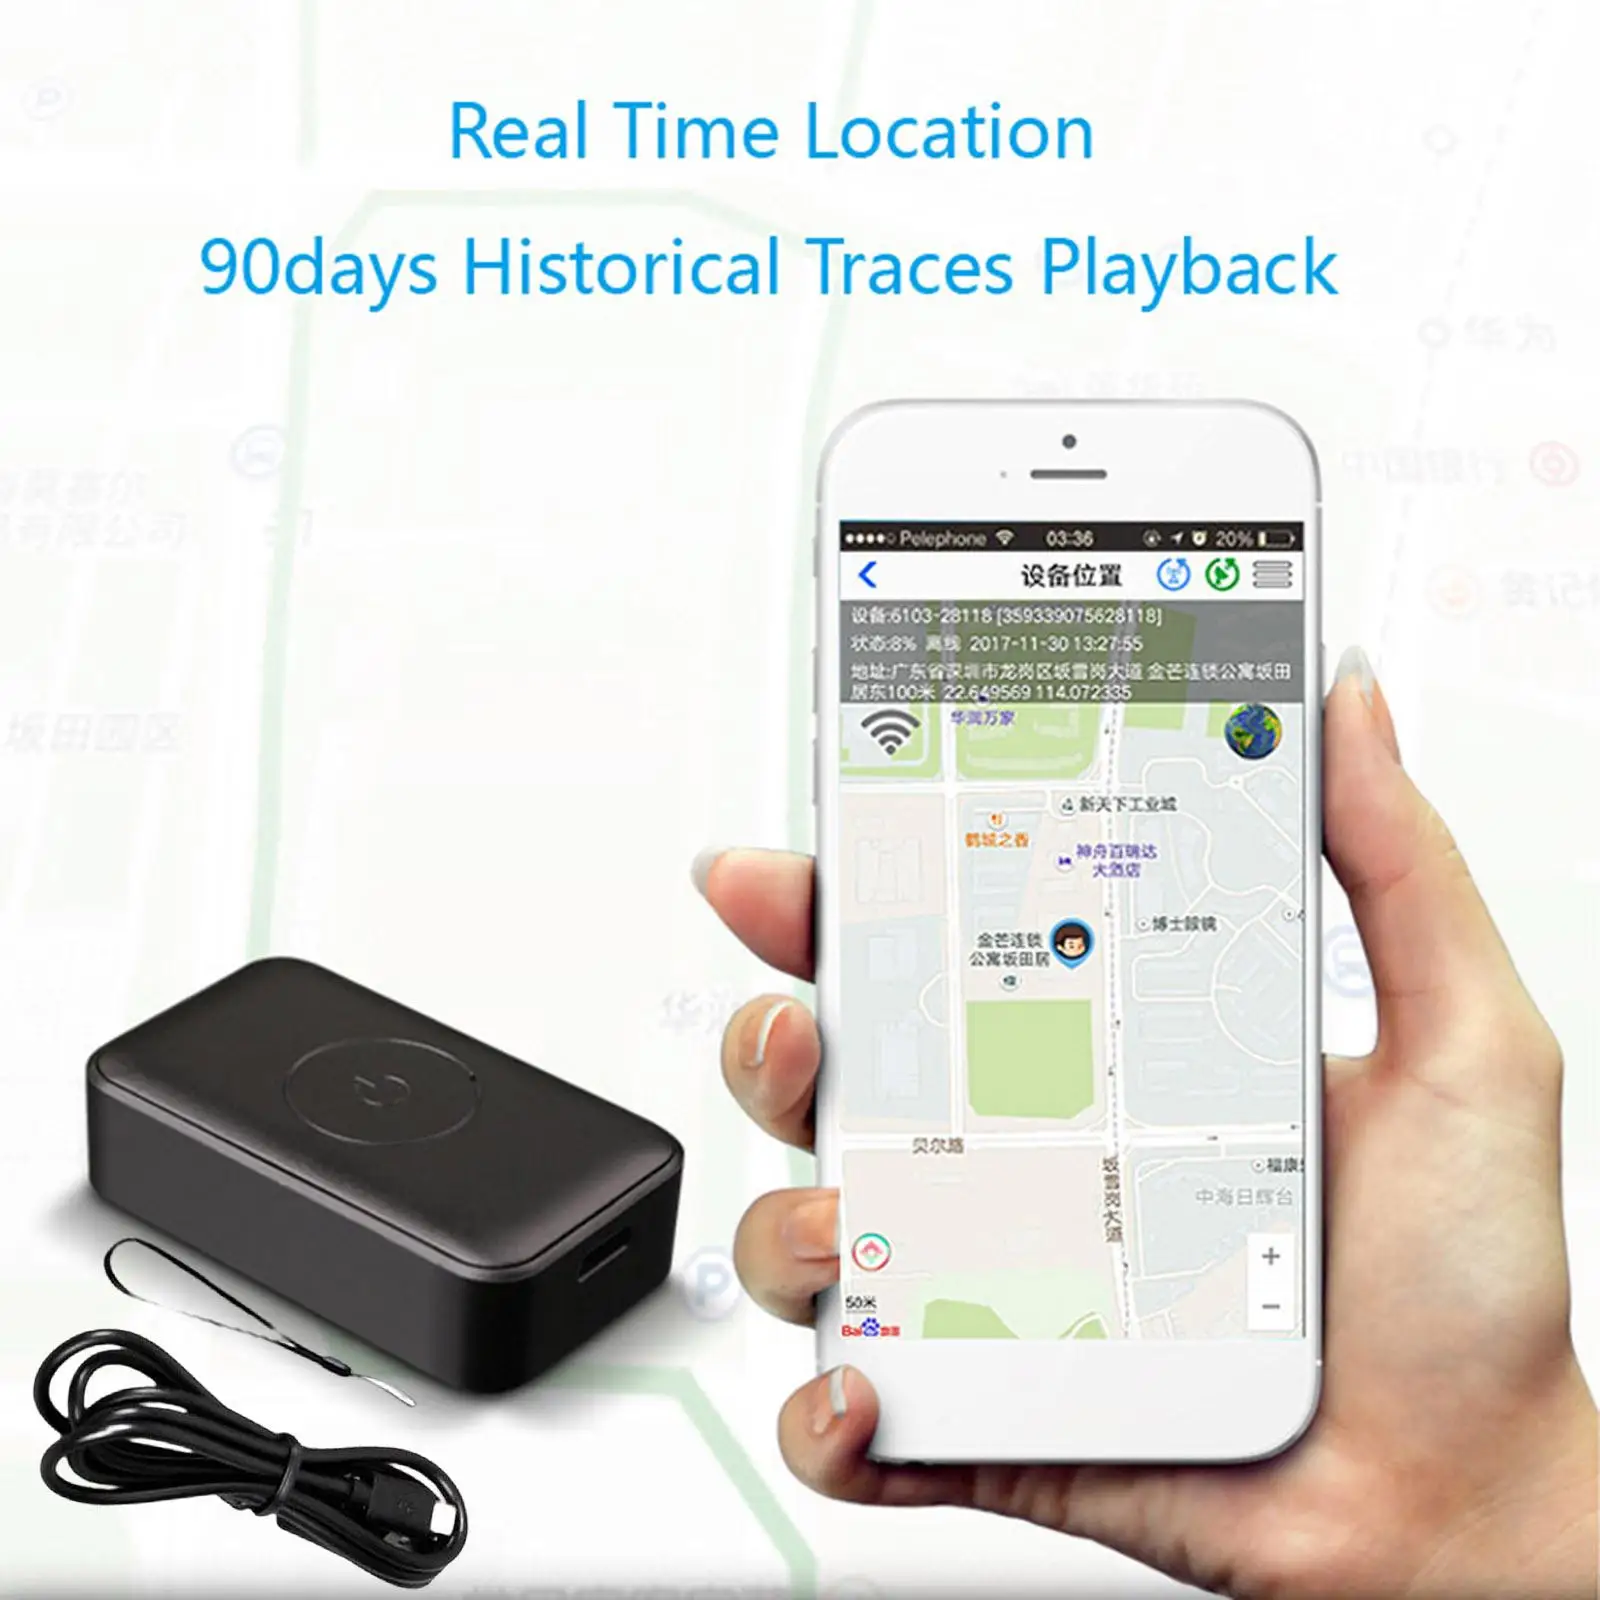   Playback Voice Recording SOS Call GPS    lbs App Tum-on /   Device  Trucks Car